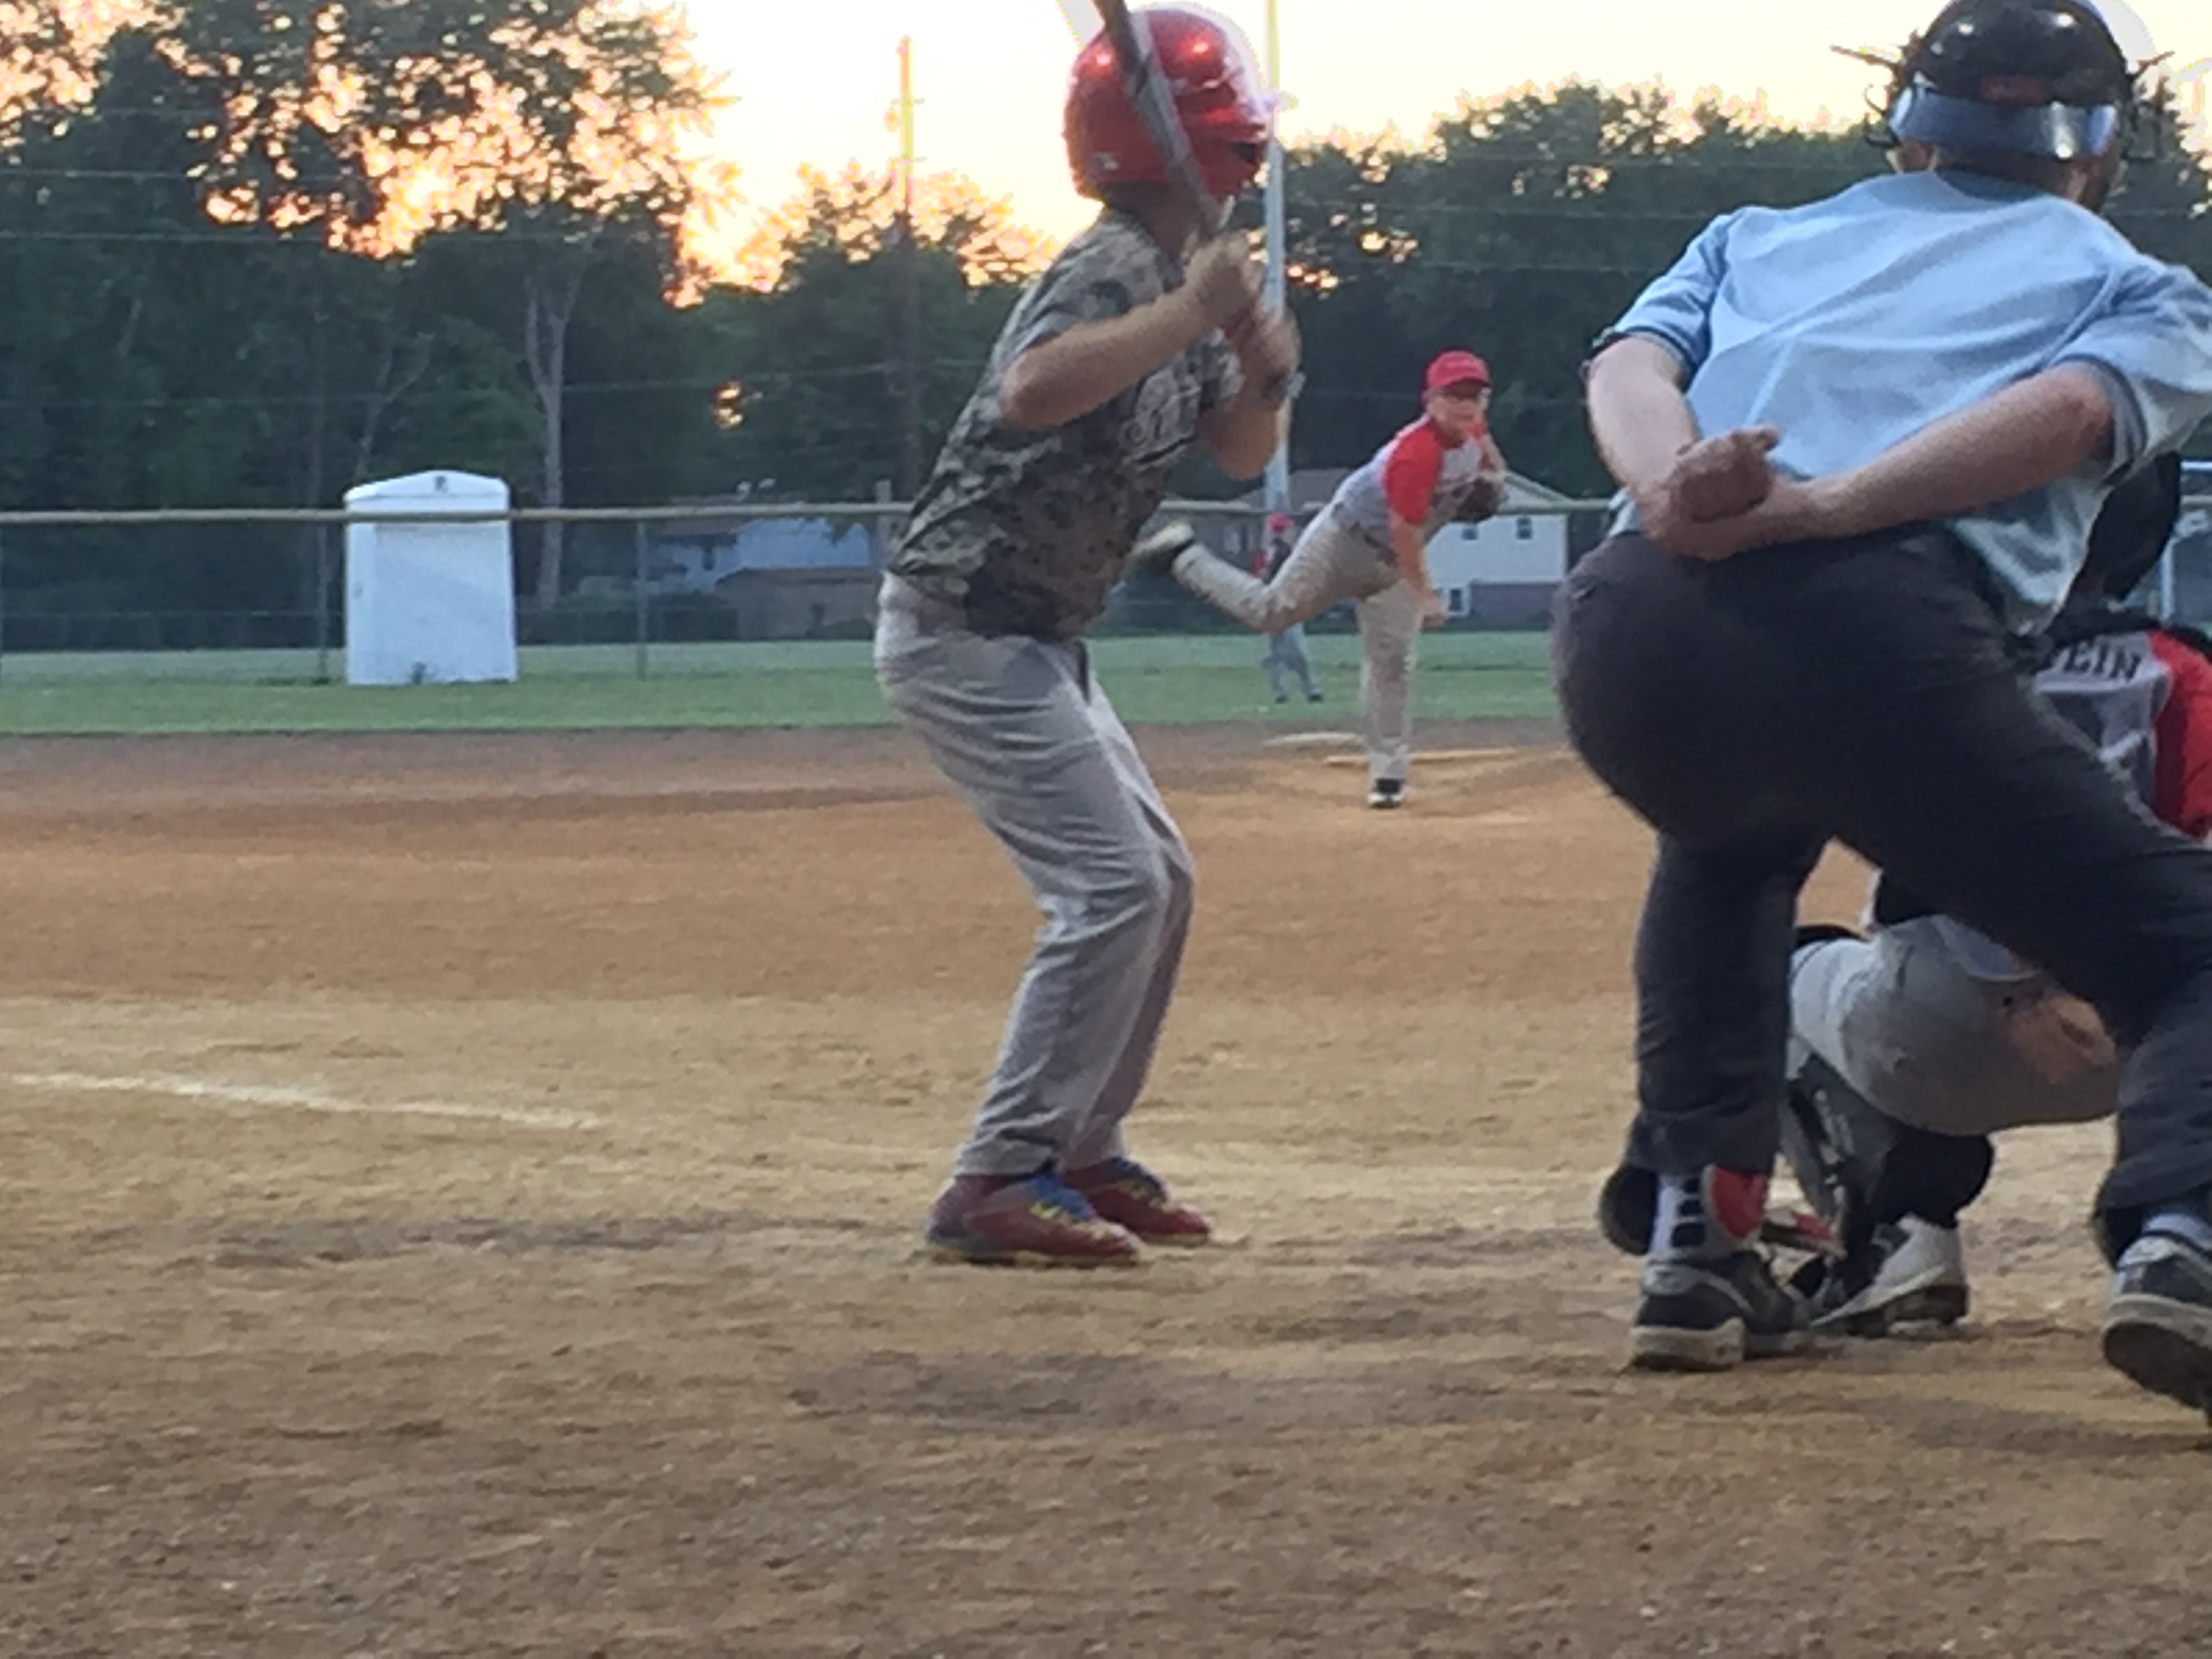 Got Dents Springfield IL, Vs Riverton Rangers of Riverton IL, Baseball Game June 18, 2016